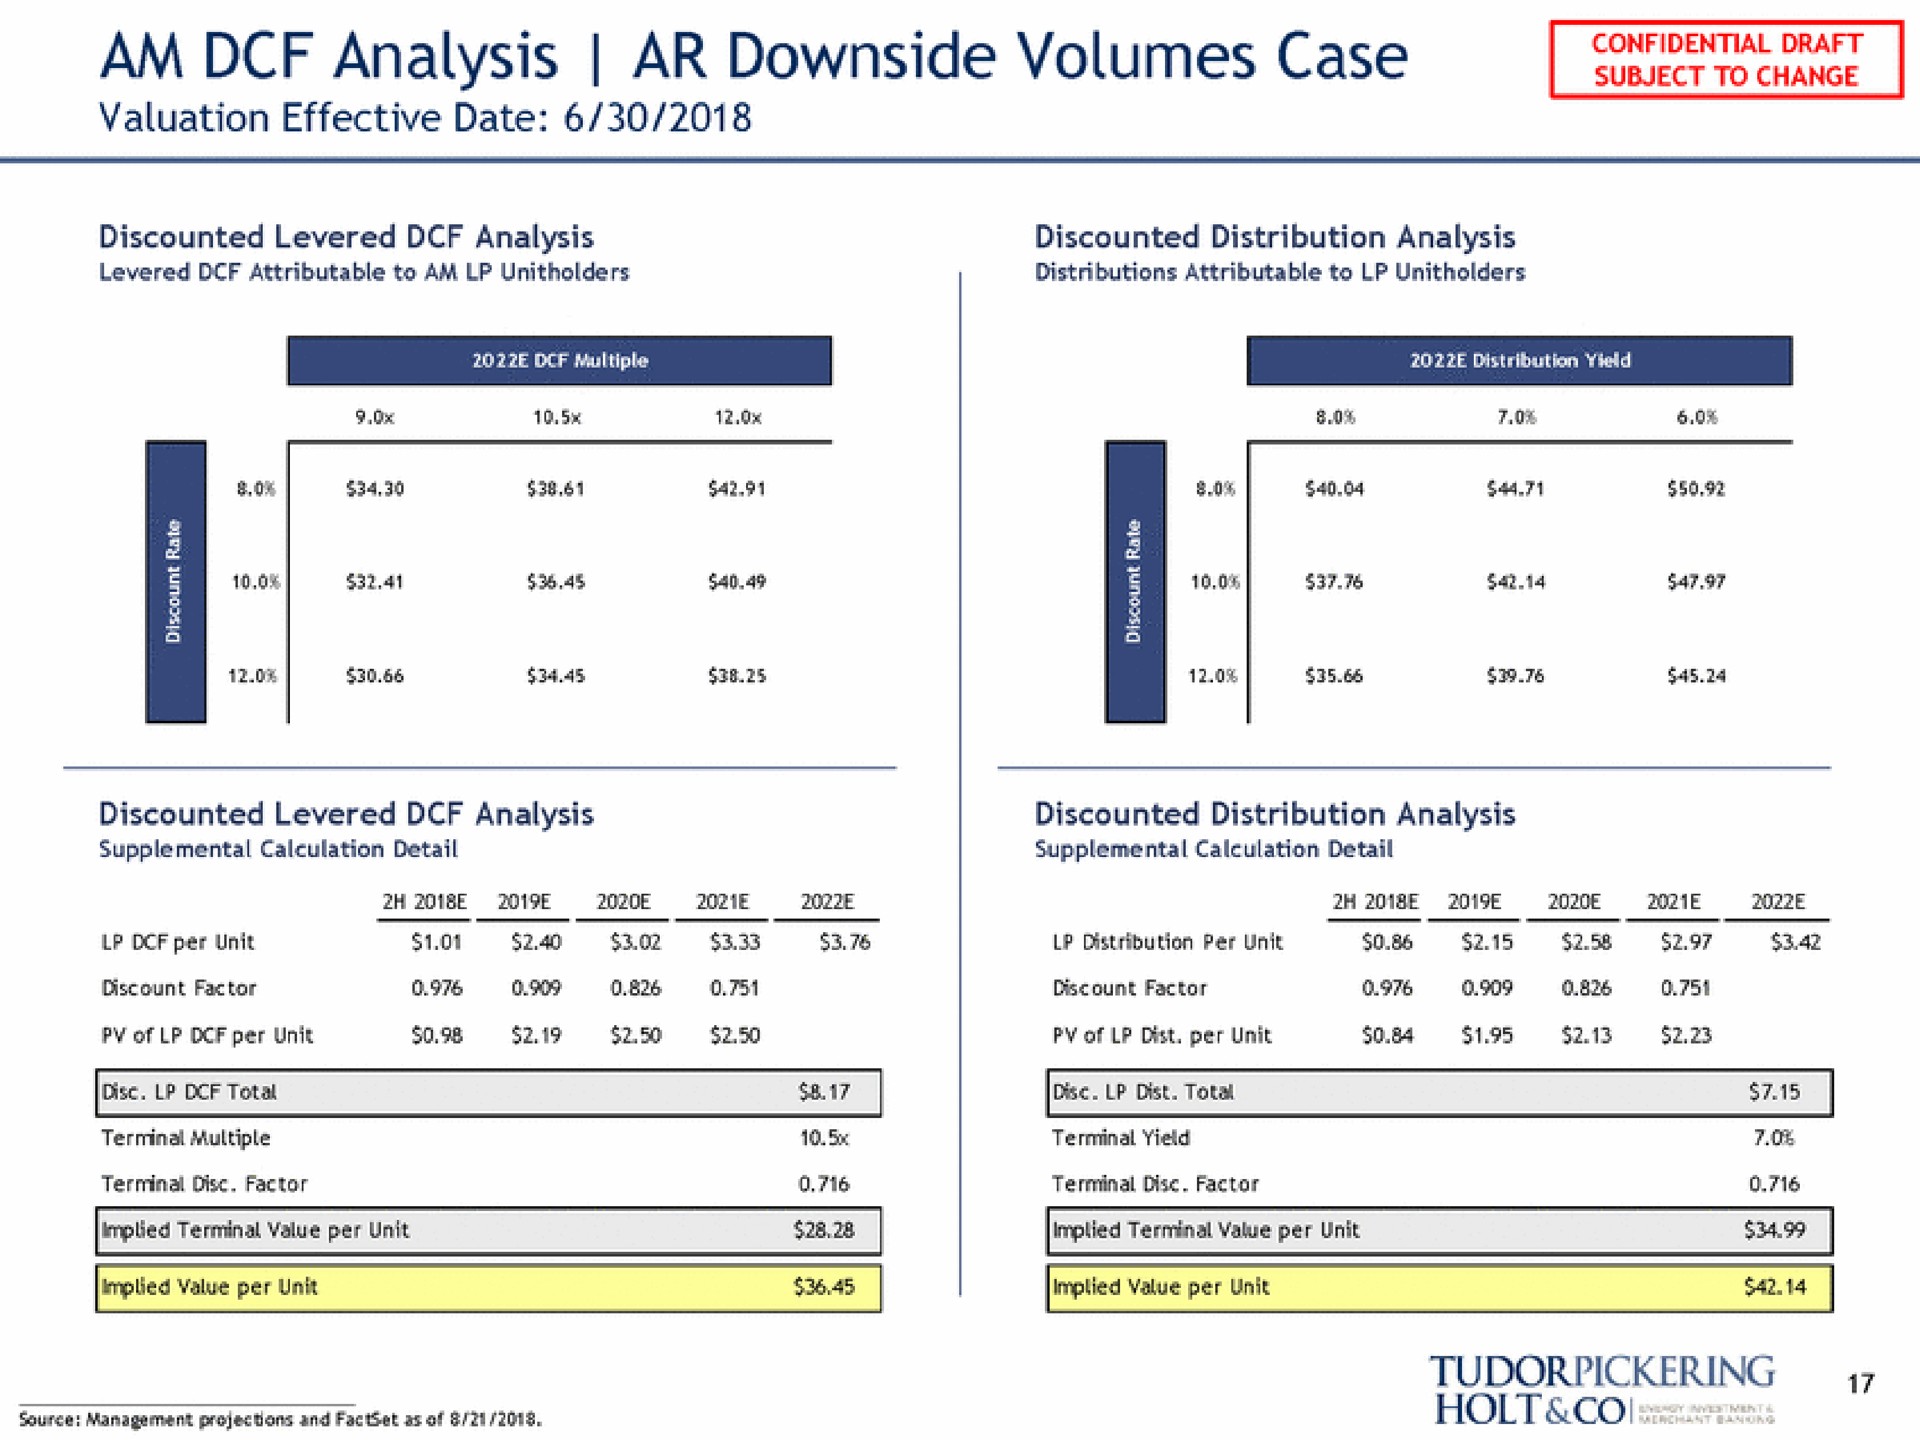 am analysis downside volumes case | Tudor, Pickering, Holt & Co